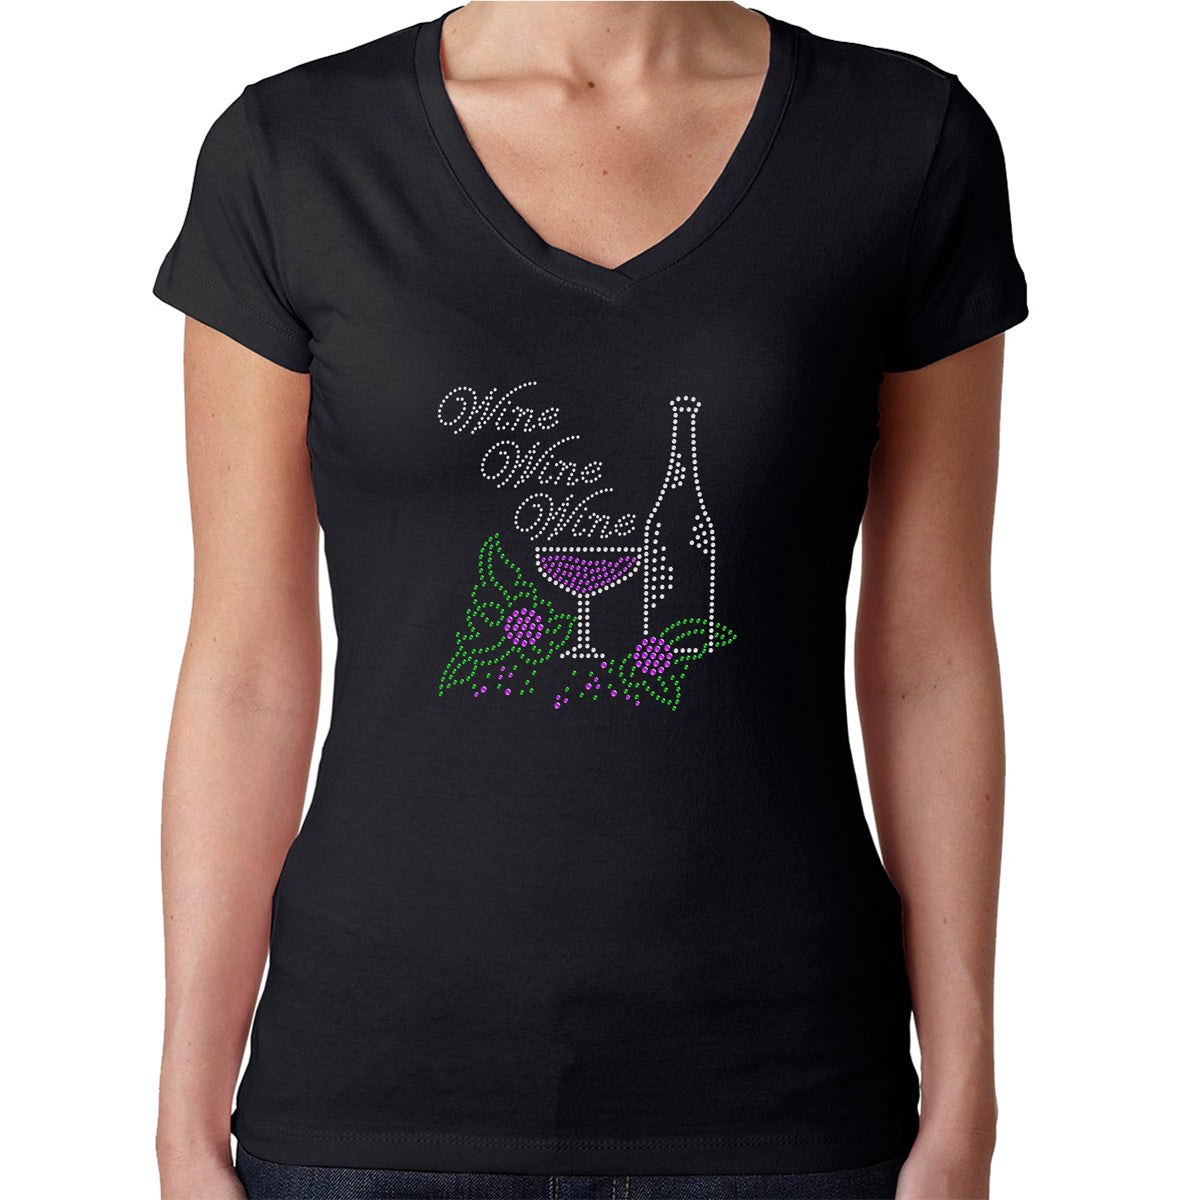 Womens T-Shirt Rhinestone Bling Black Fitted Tee Wine Wine Glass Bottle